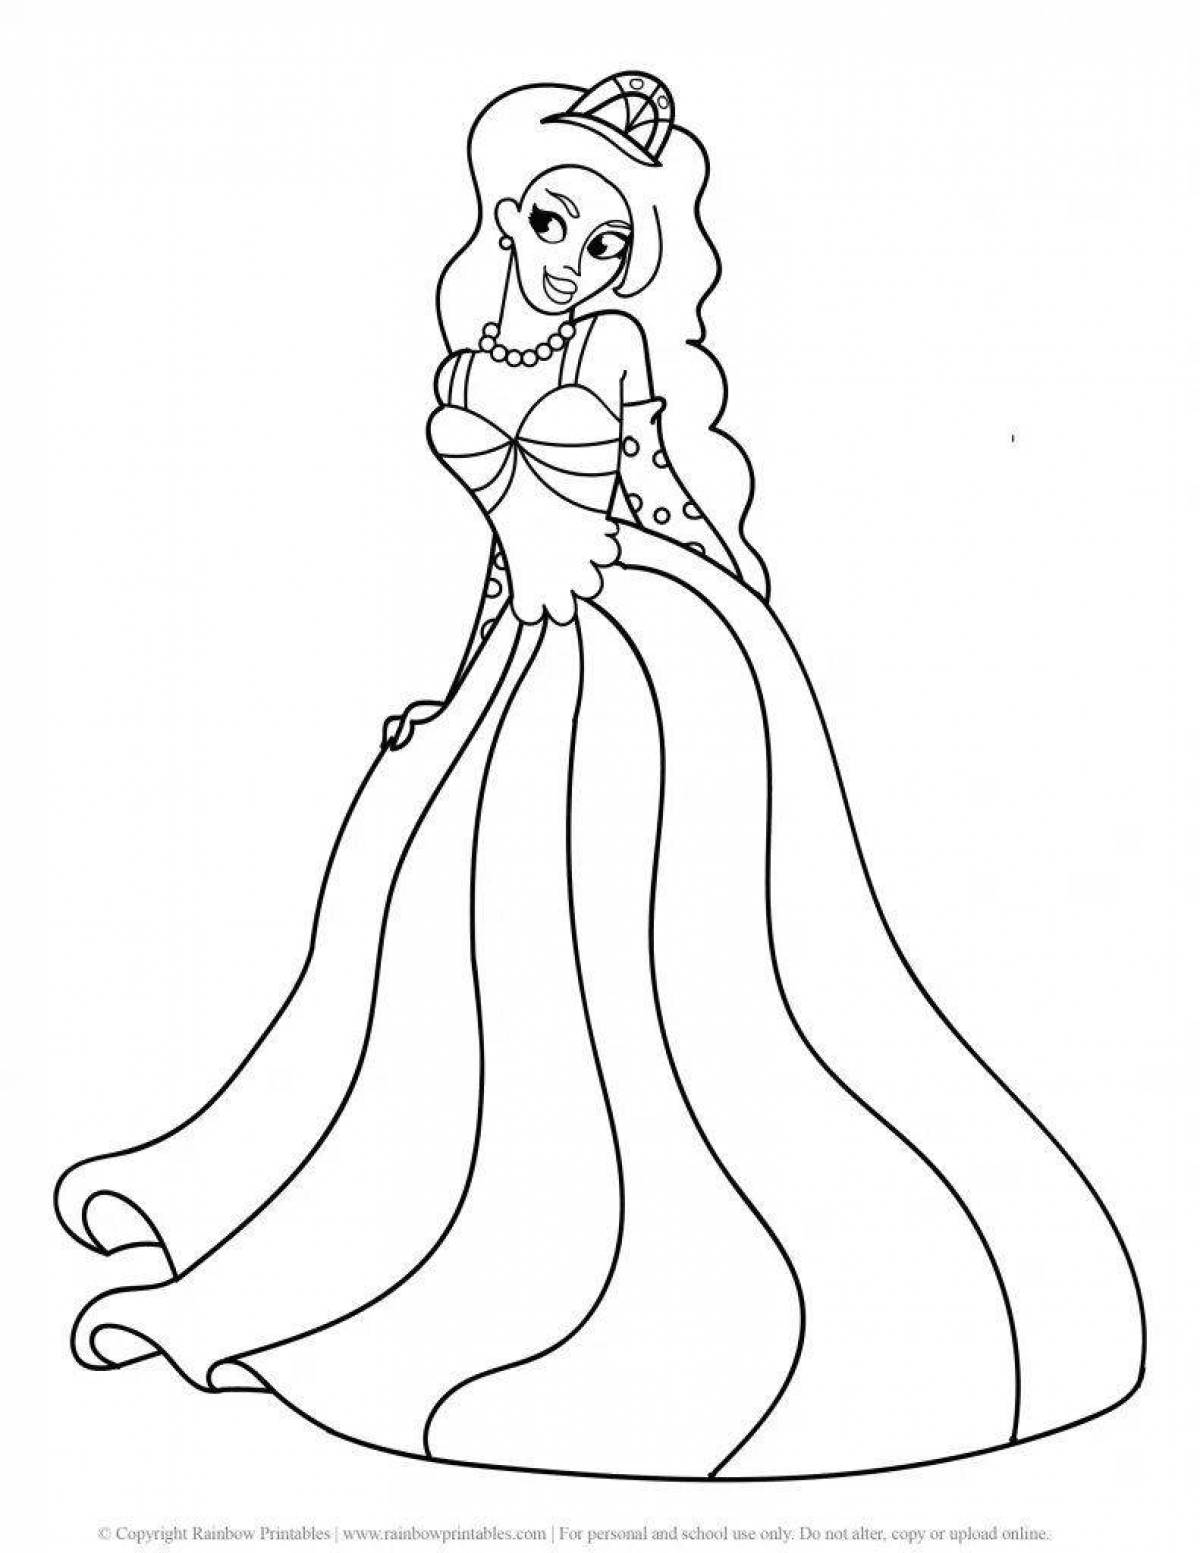 Coloring page charming princess